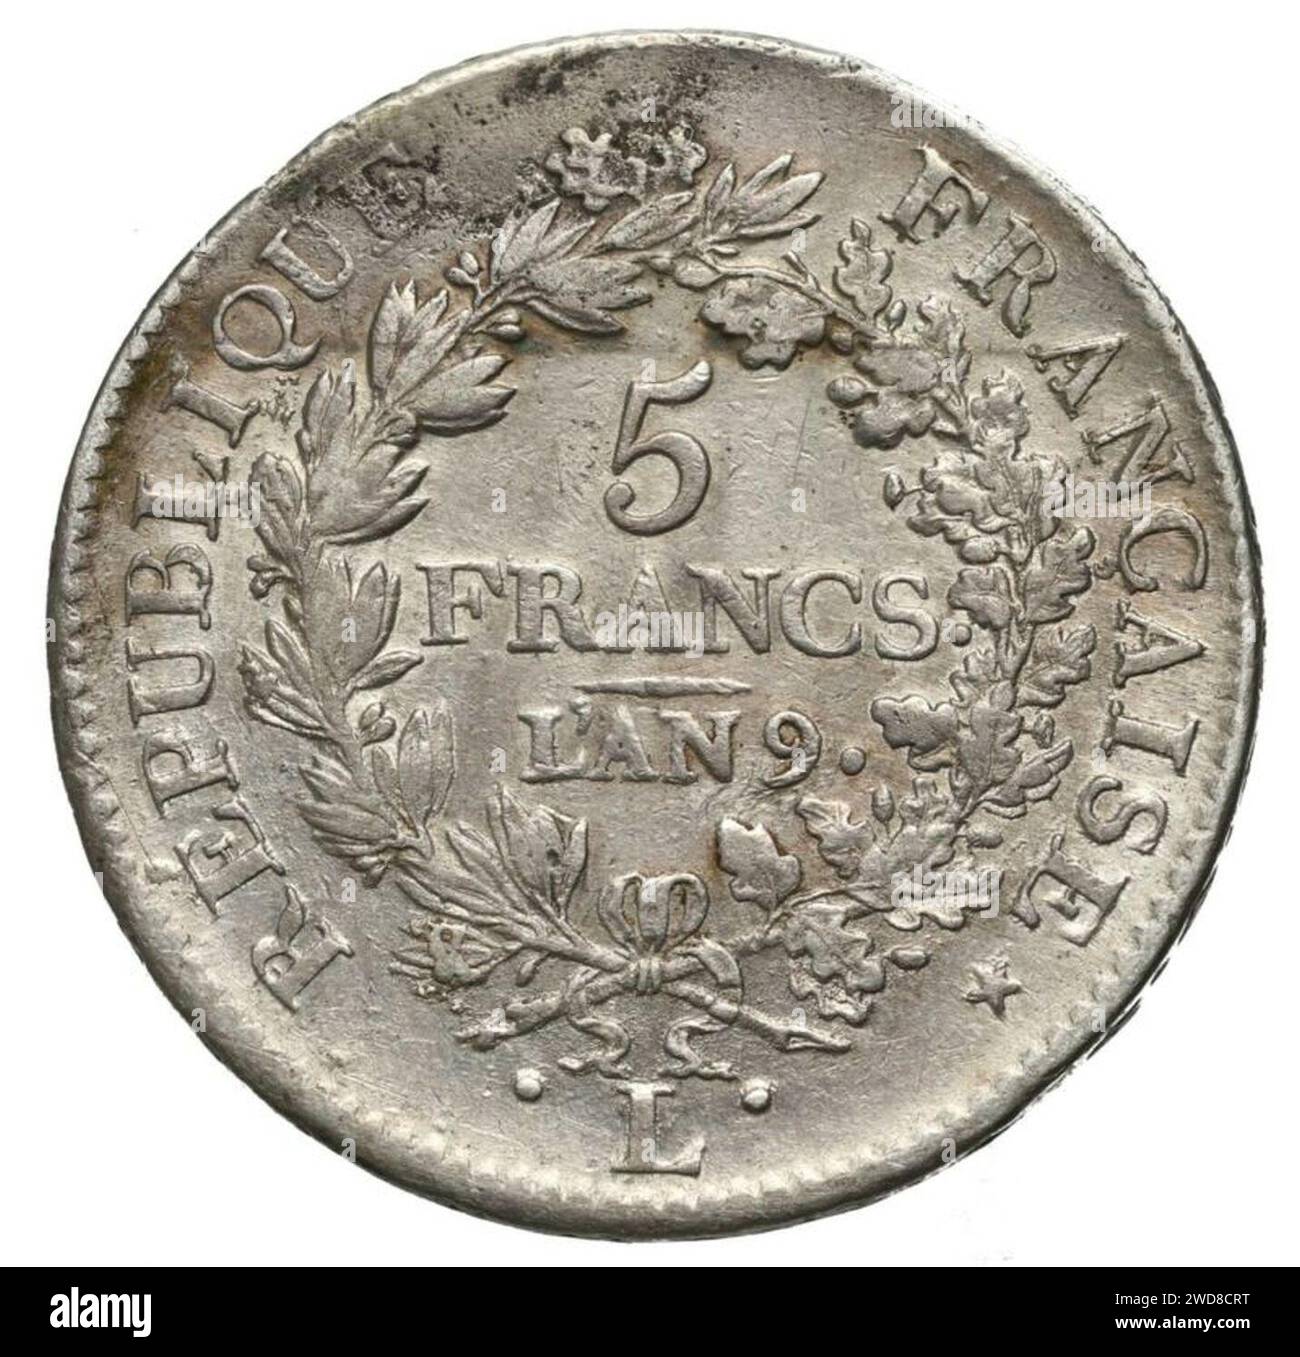 5 Francs 9 L'an - Französische Republik (1800) Bielik-Münzen 01. Stockfoto